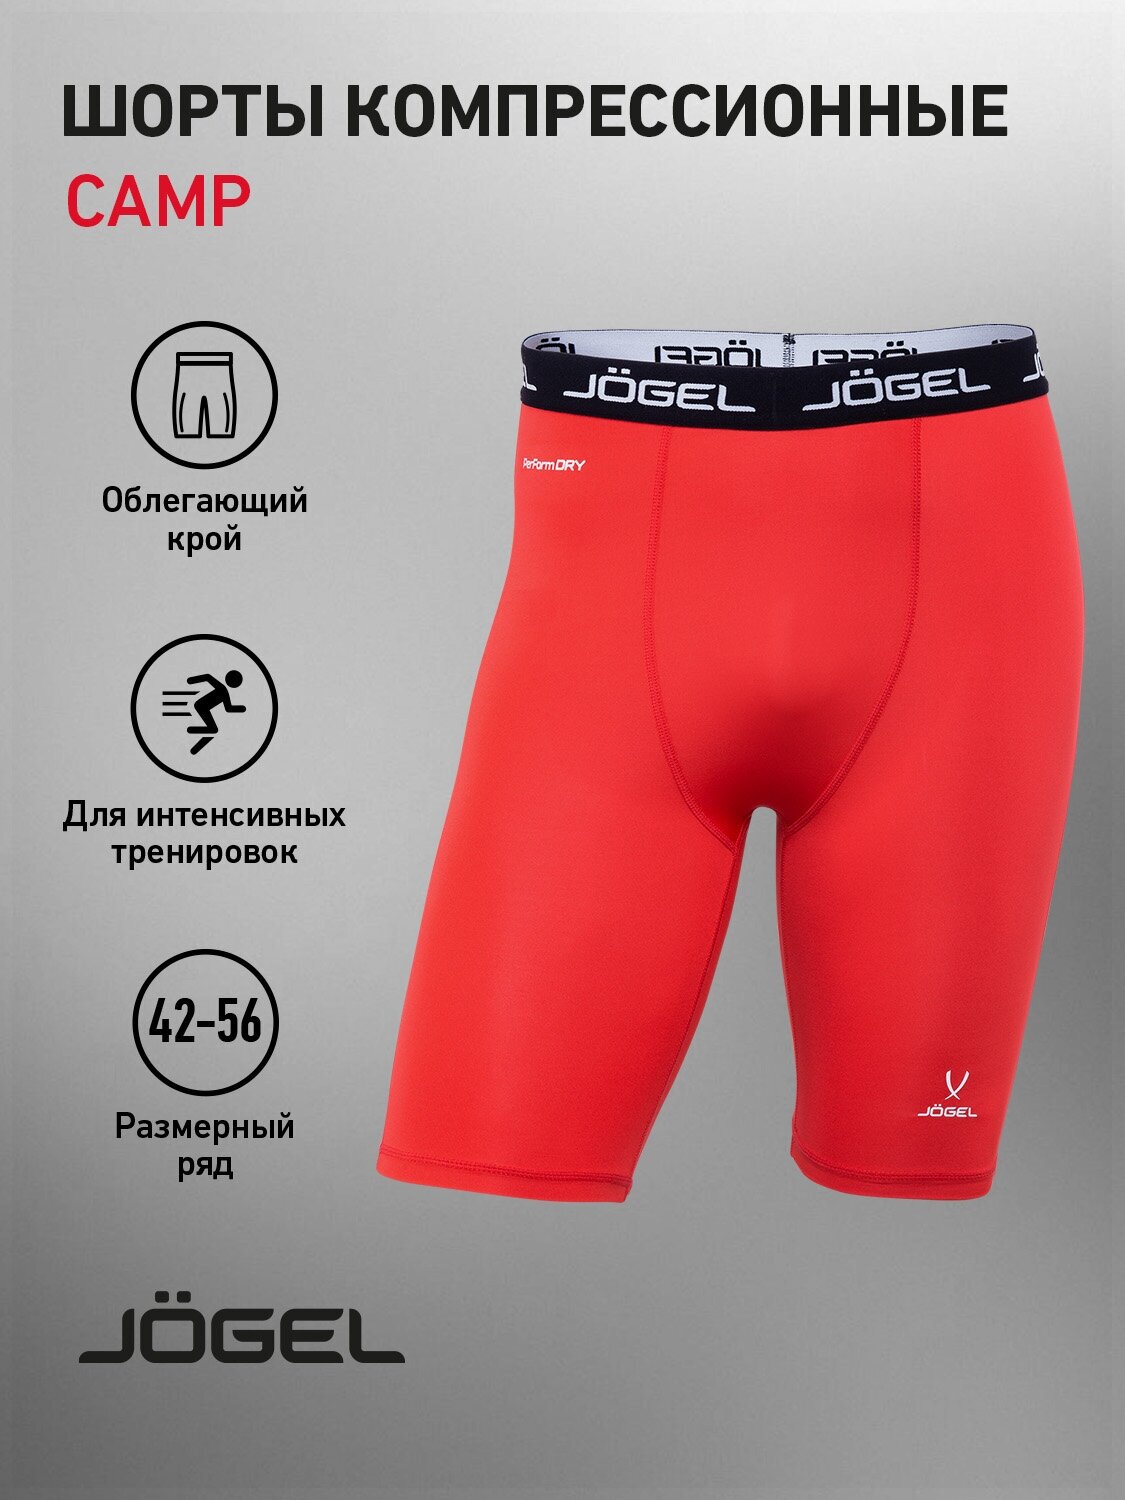 Шорты спортивные Jogel Белье шорты Jogel Camp Performdry Tight УТ-00016270